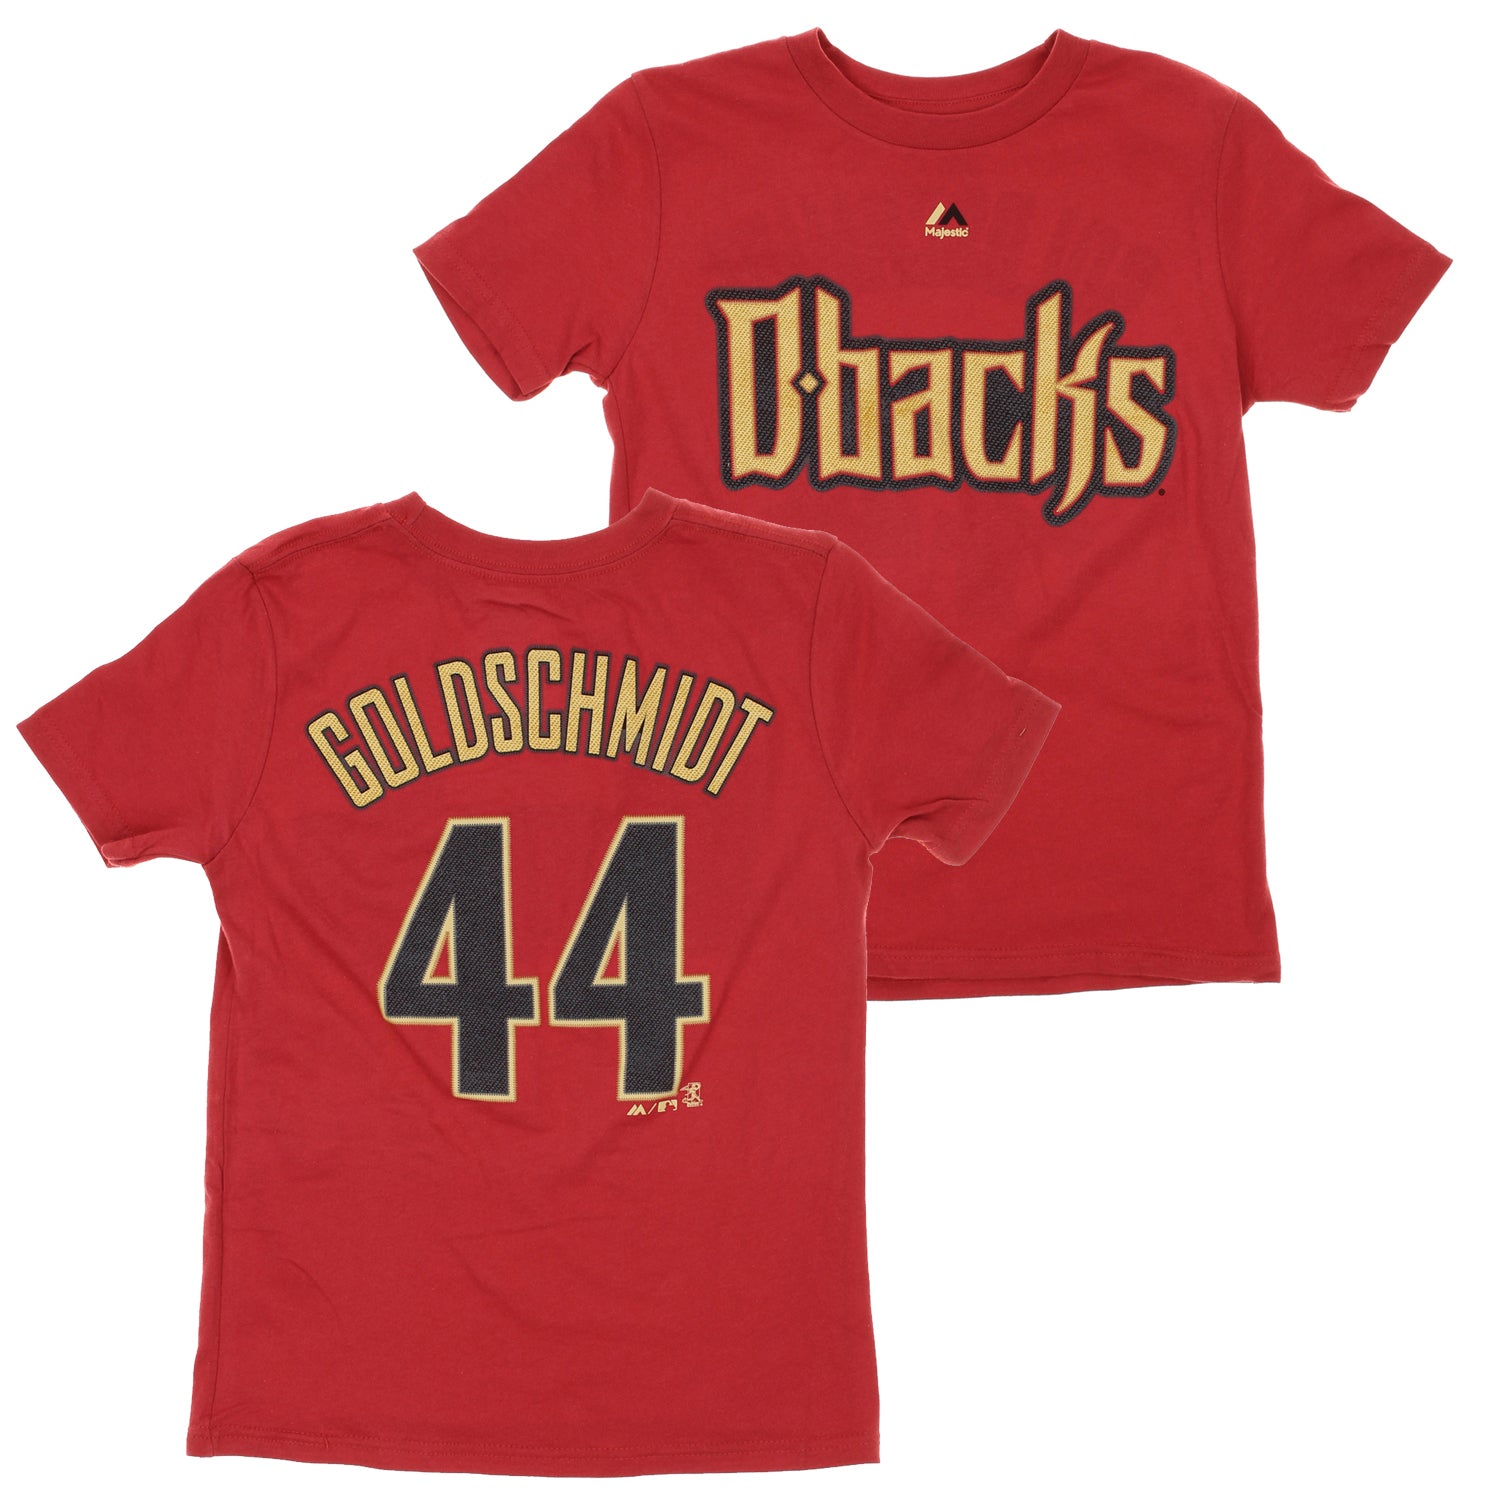 Arizona Diamondbacks Kids' Shirt - Red